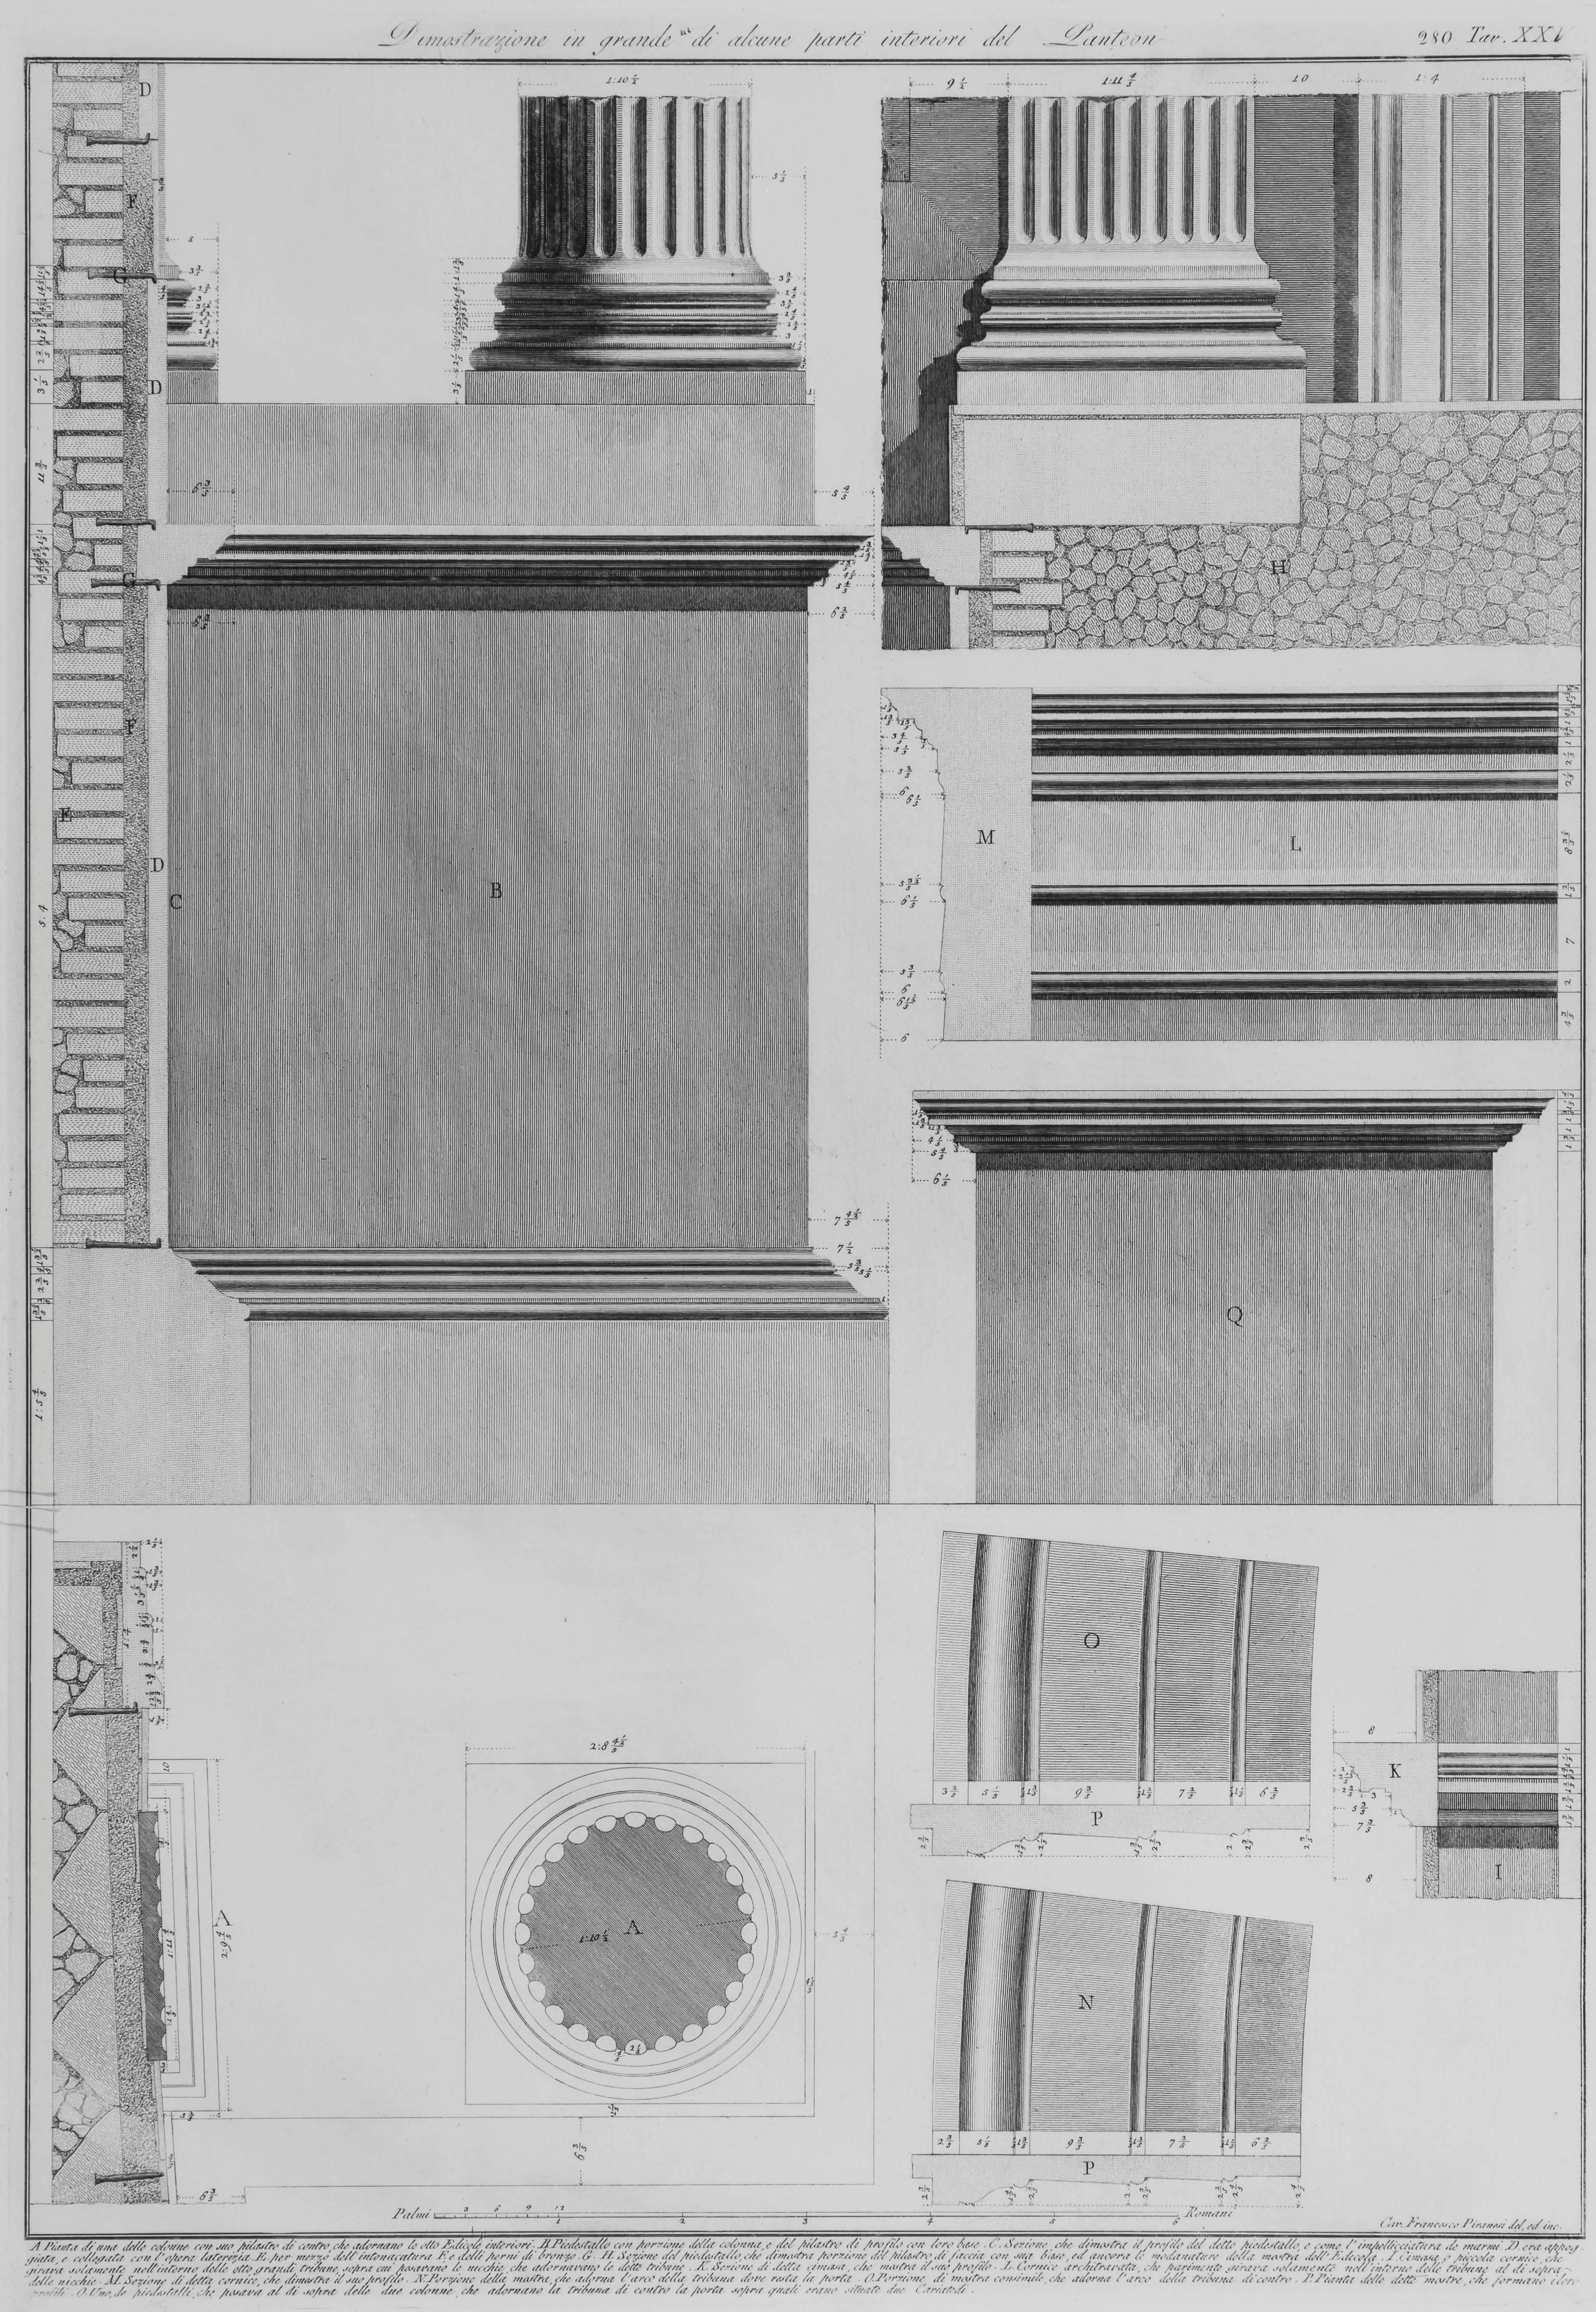 Giovanni Battista Piranesi Interior Print - Architectural Elements of the Interior of the Pantheon